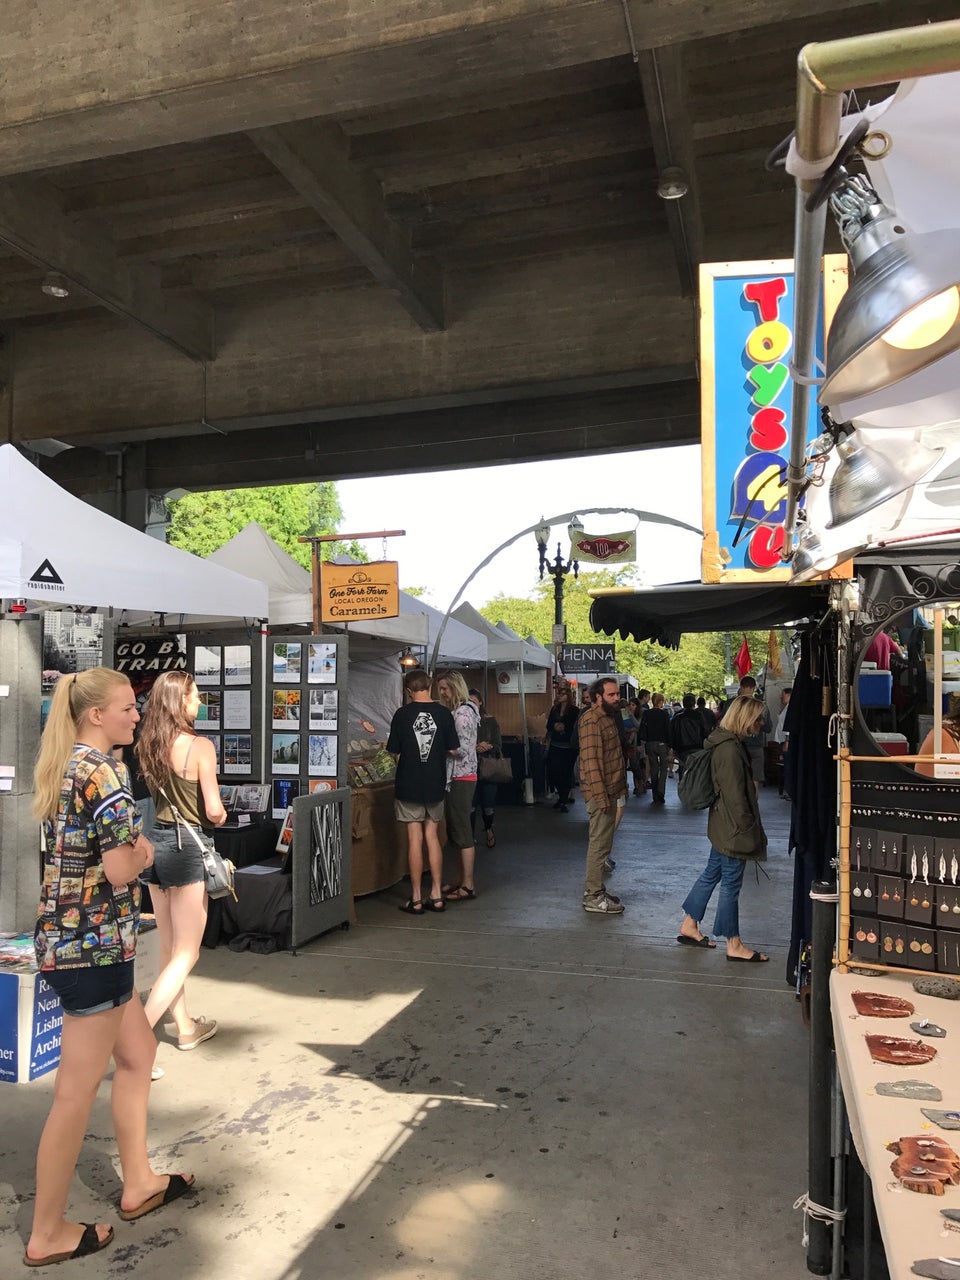 Photo of Portland Saturday Market